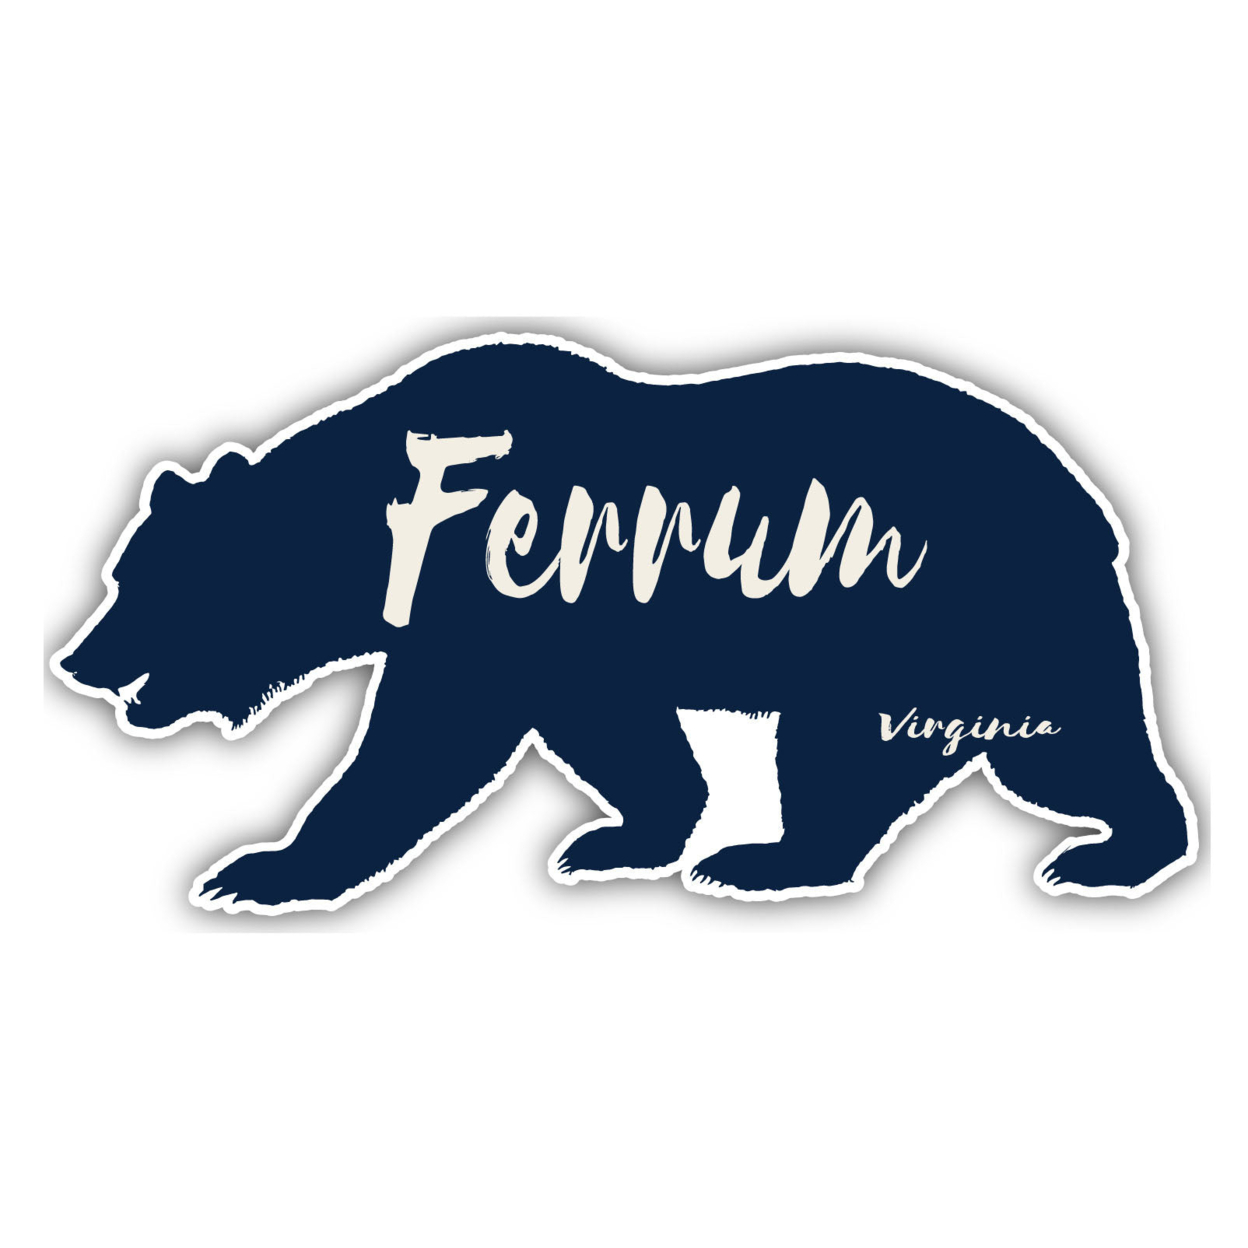 Ferrum Virginia Souvenir Decorative Stickers (Choose Theme And Size) - 4-Pack, 10-Inch, Bear